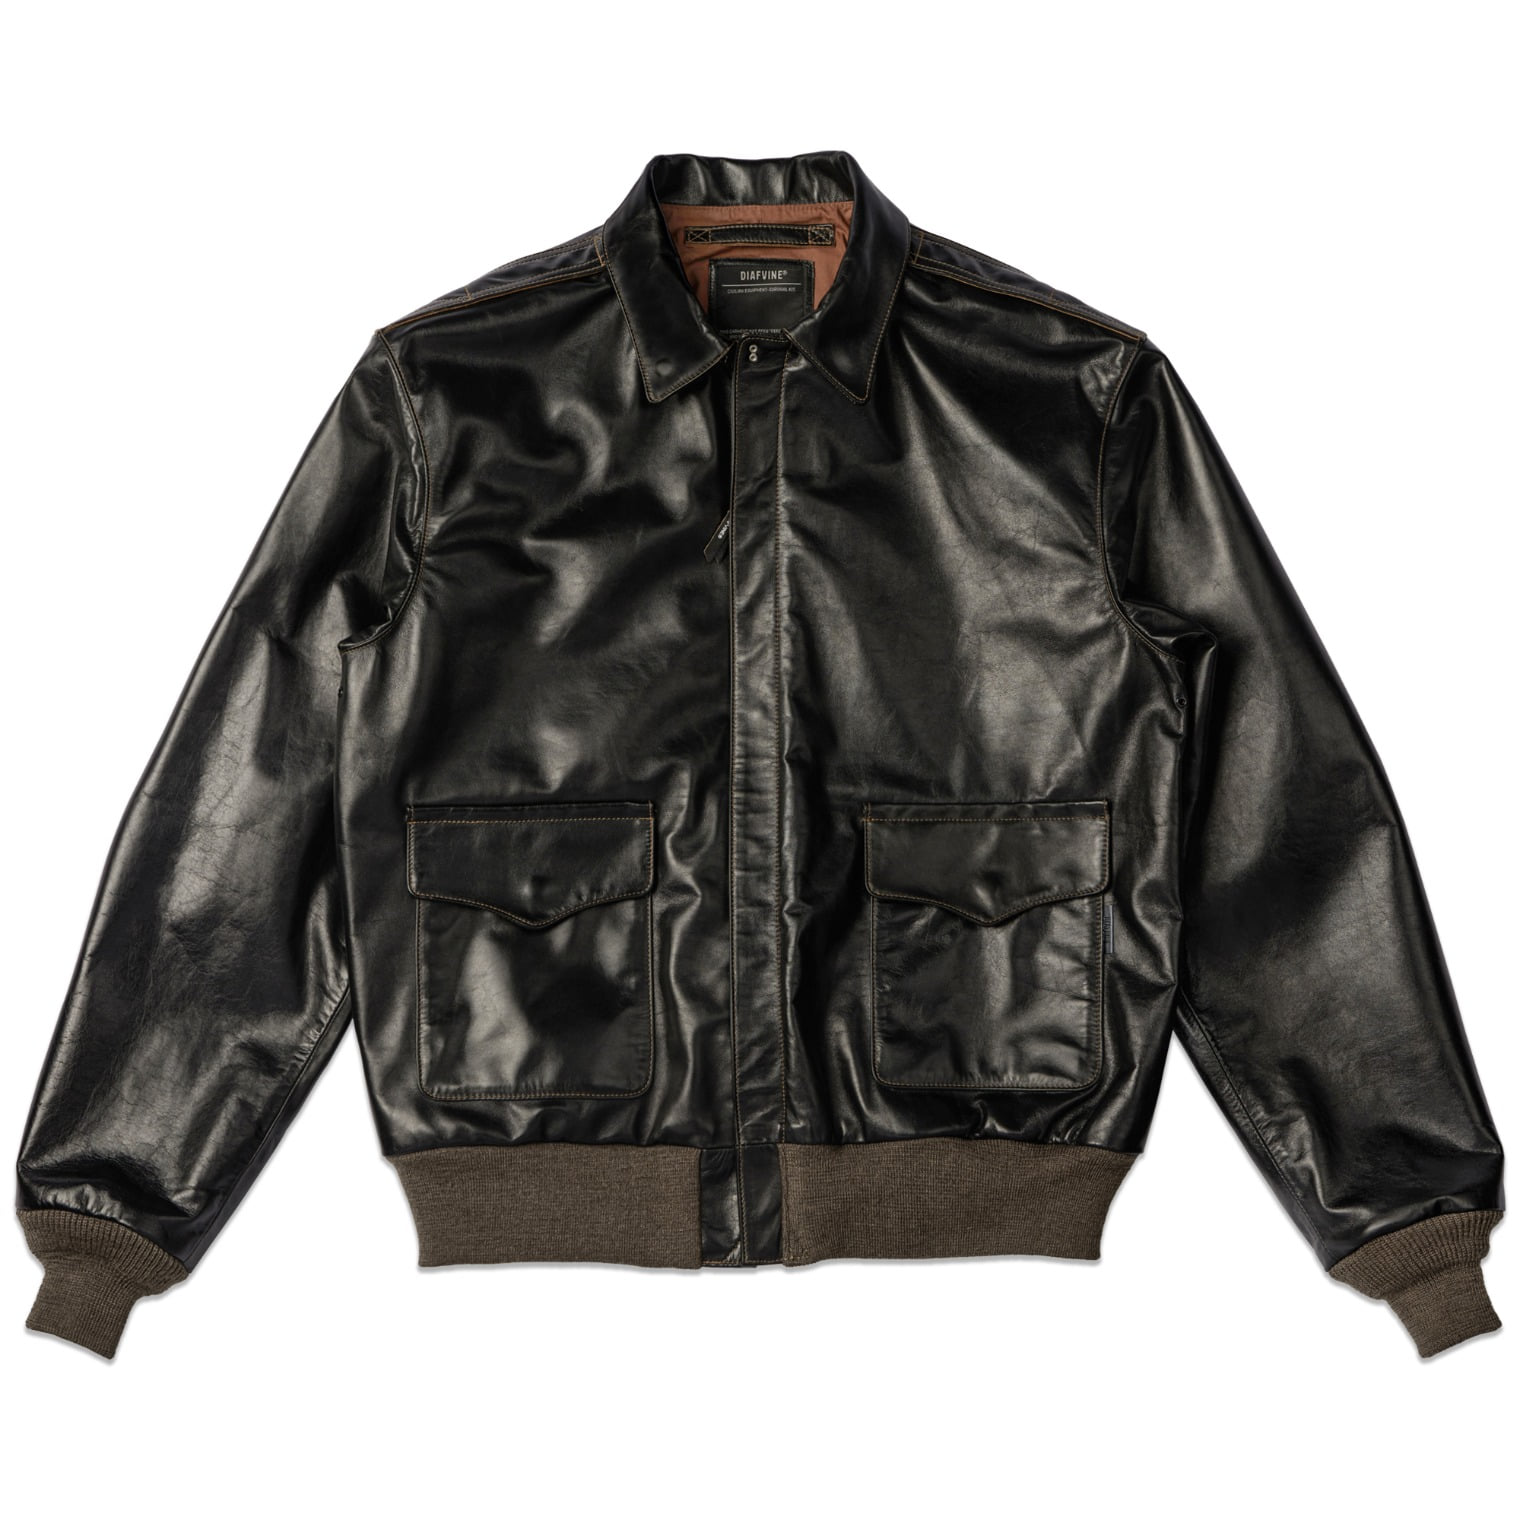 DV.LOT 695 Type A-2 Flight jacket -Black/Brown rib-